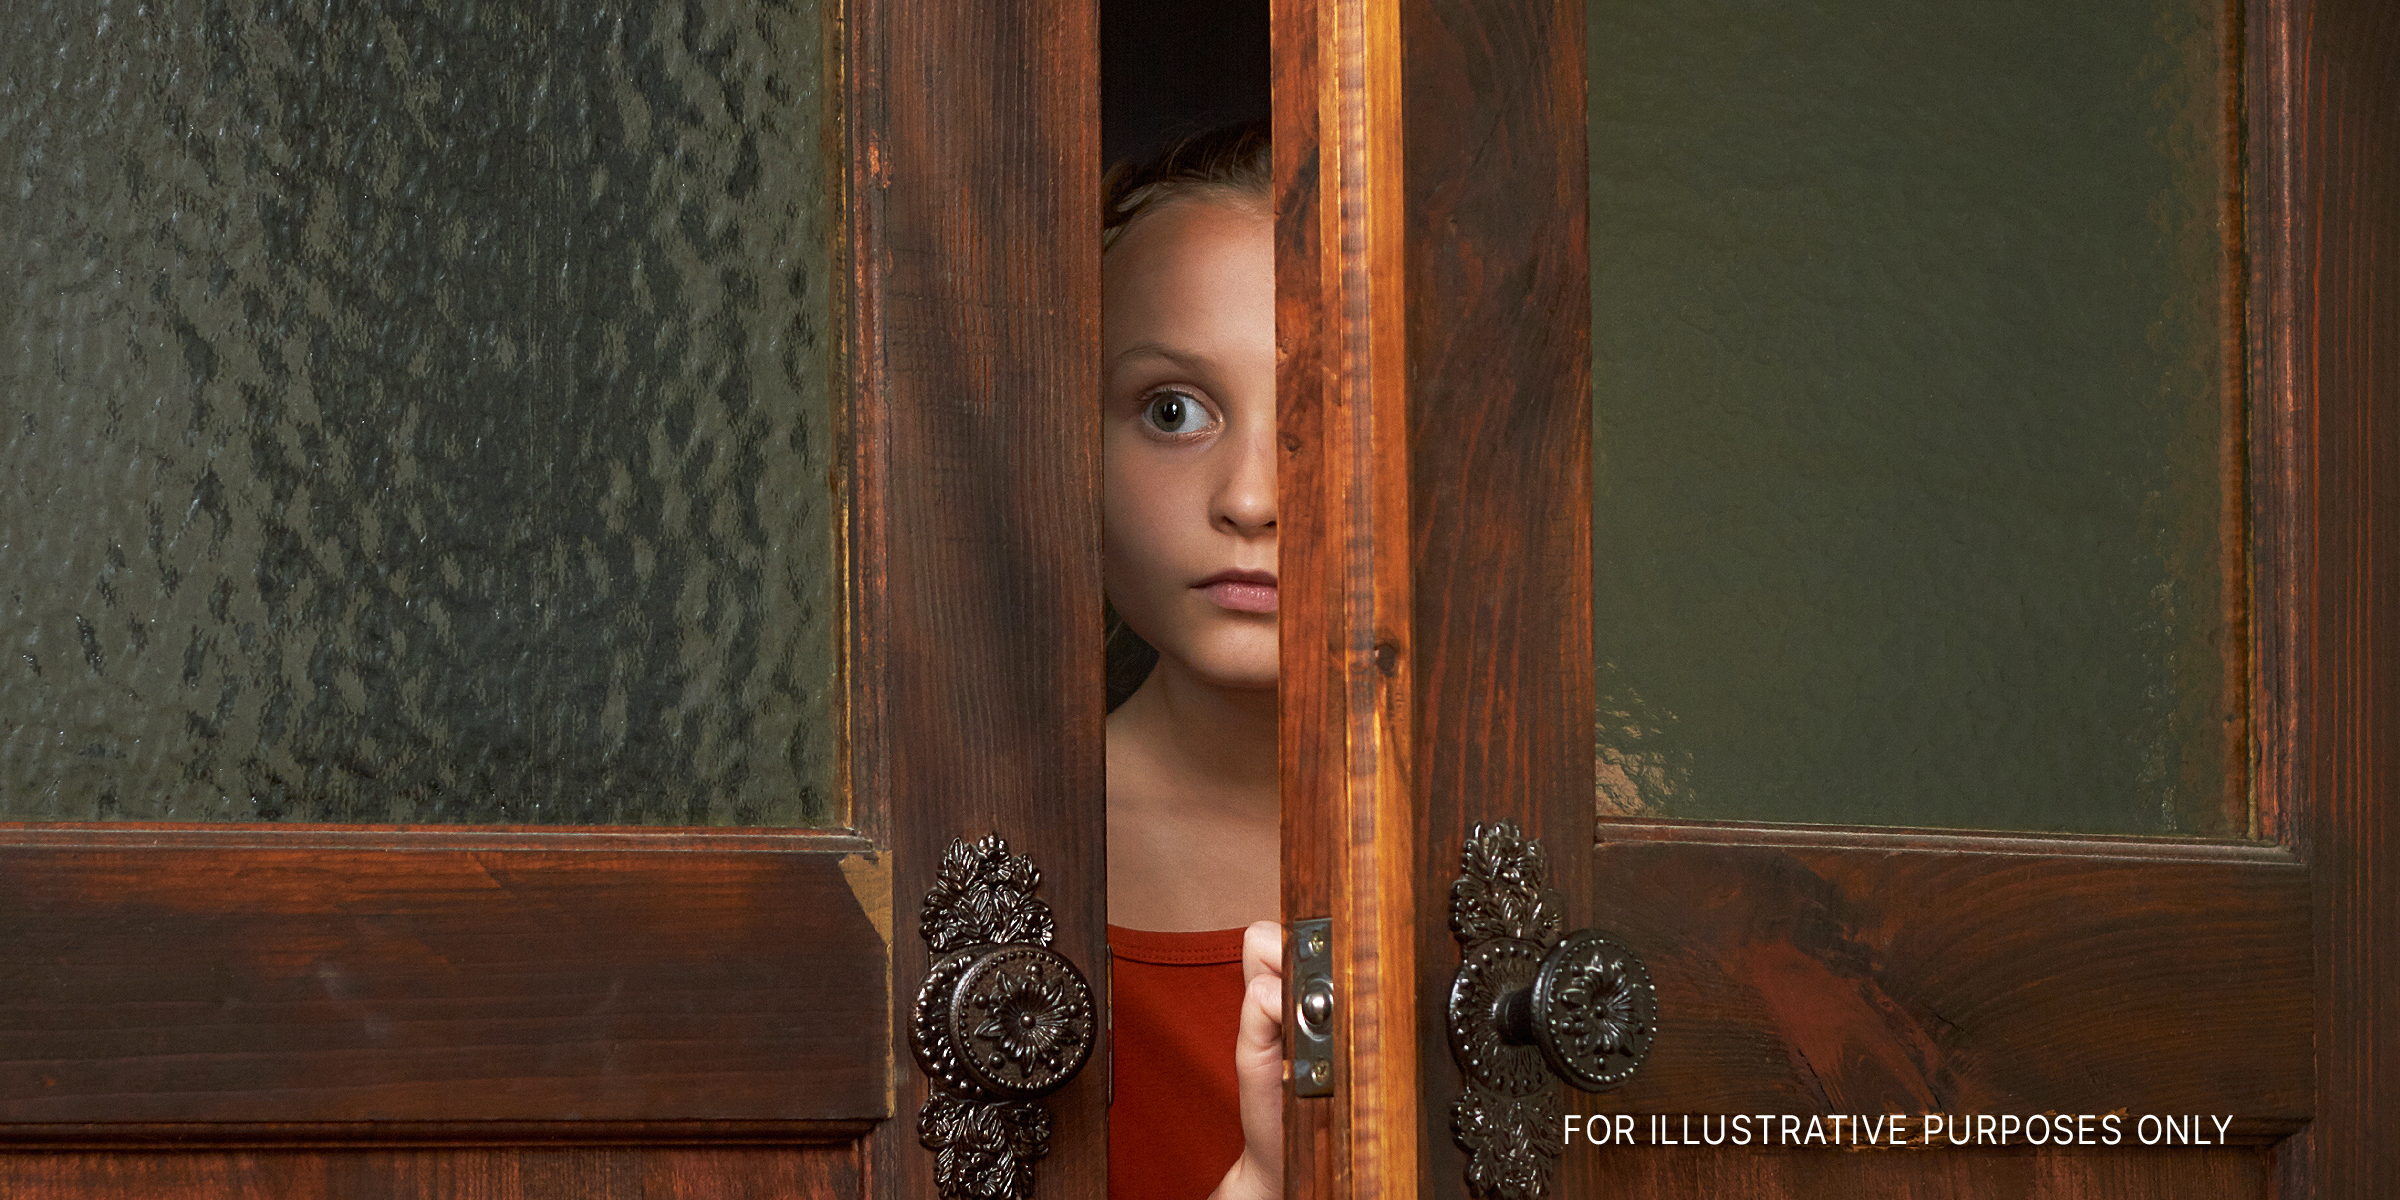 A little scared girl looking through the door slit | Source: Shutterstock